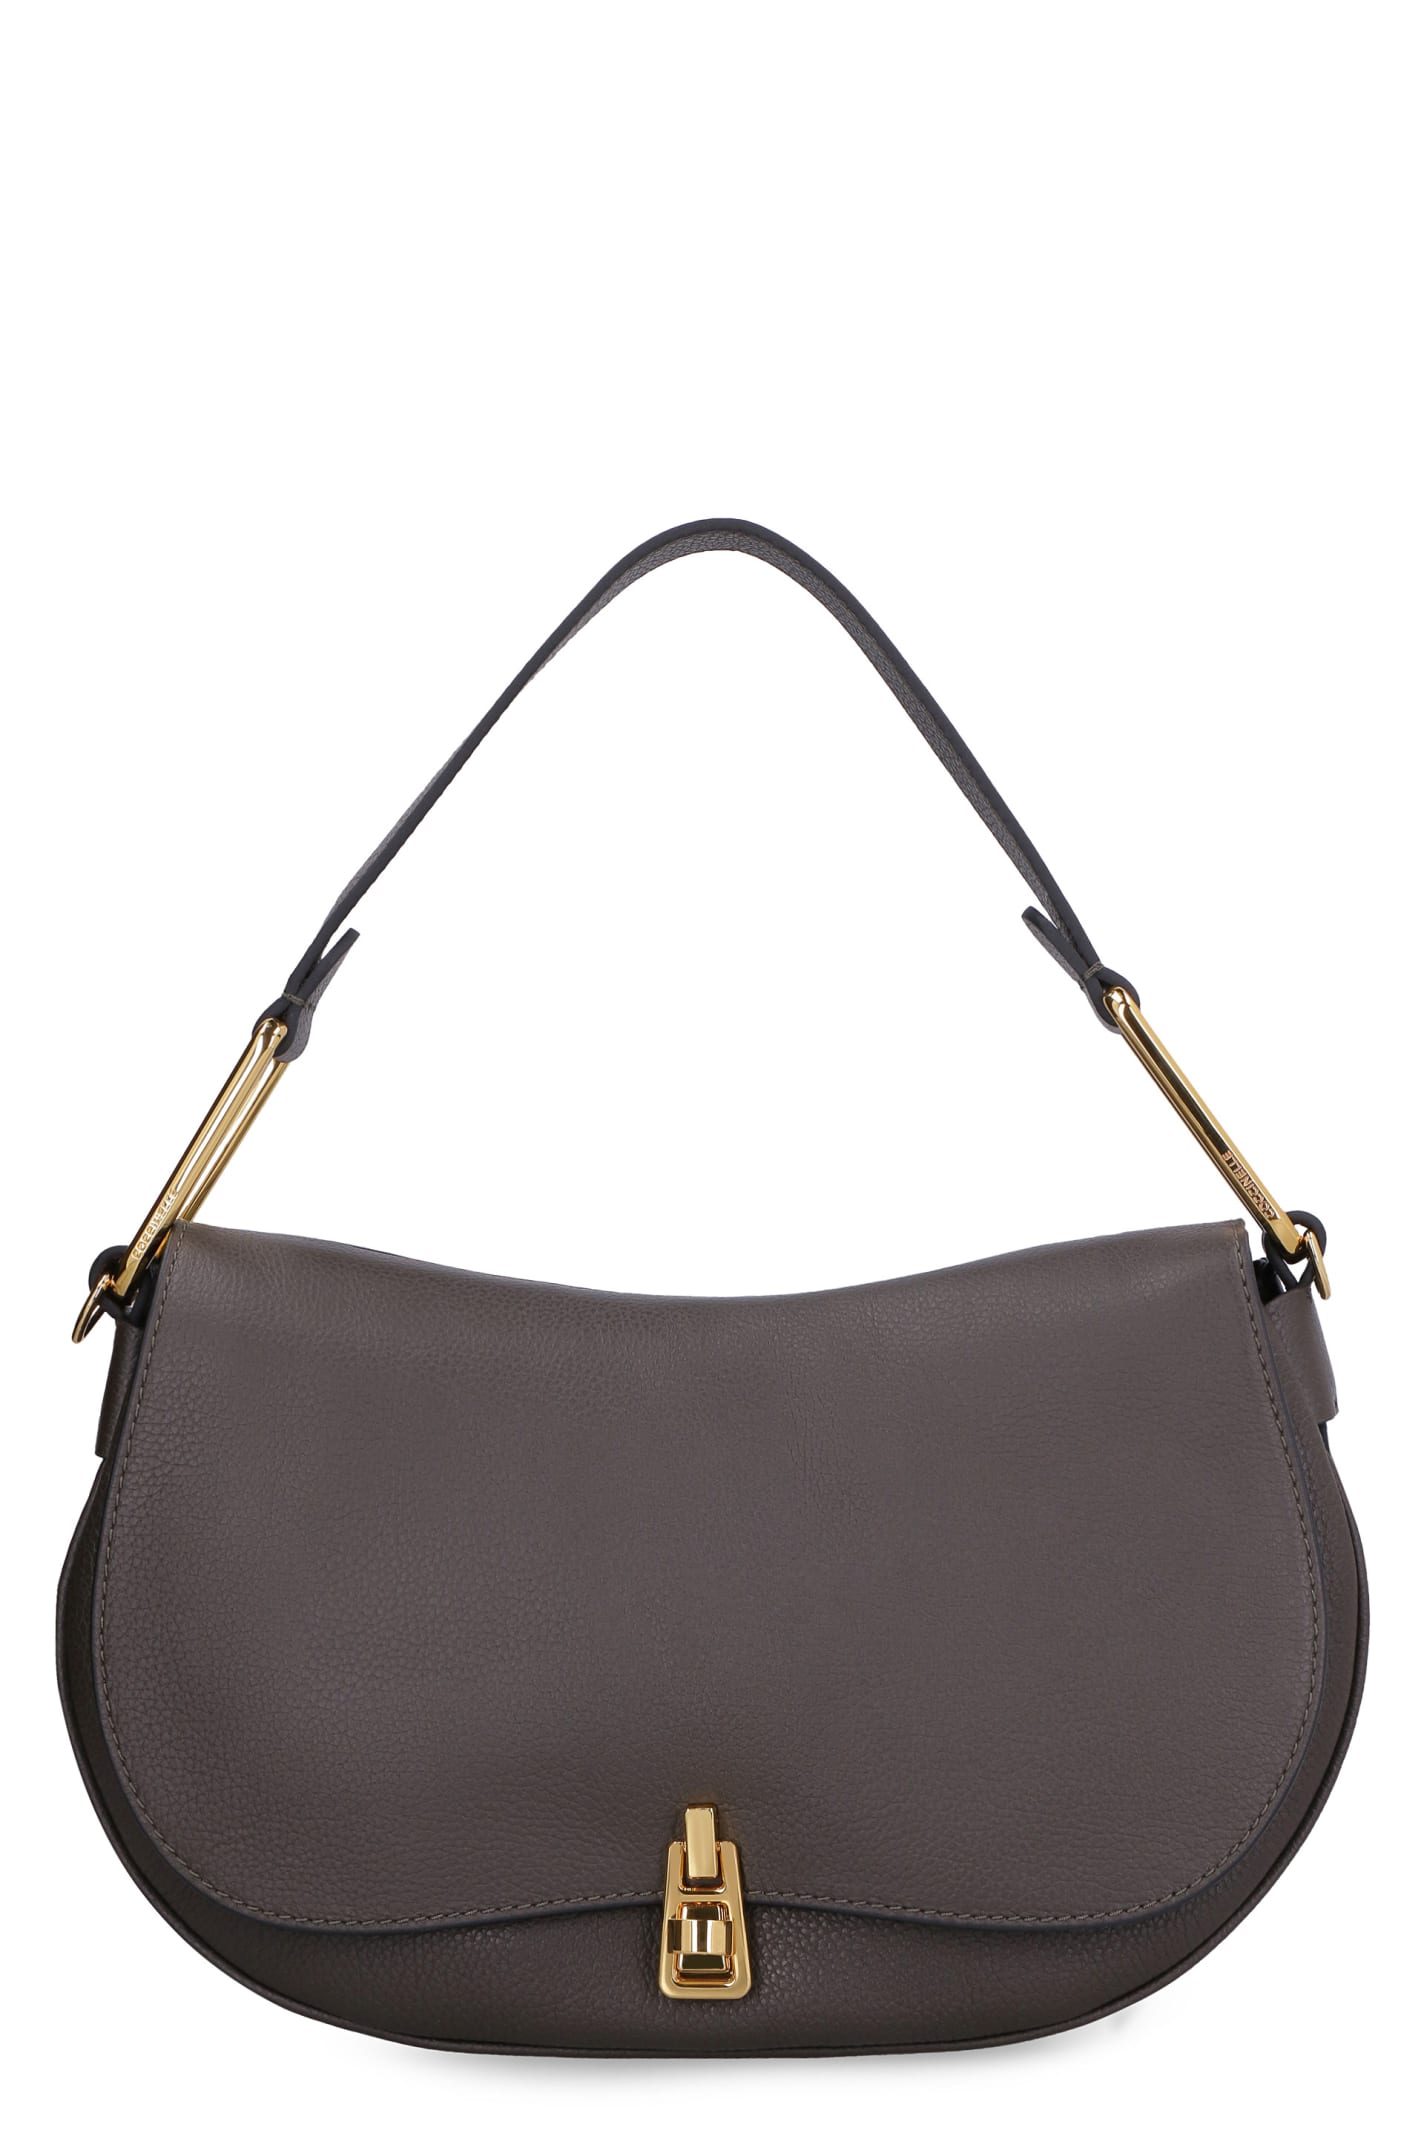 Coccinelle Magie Grainy Leather Handbag